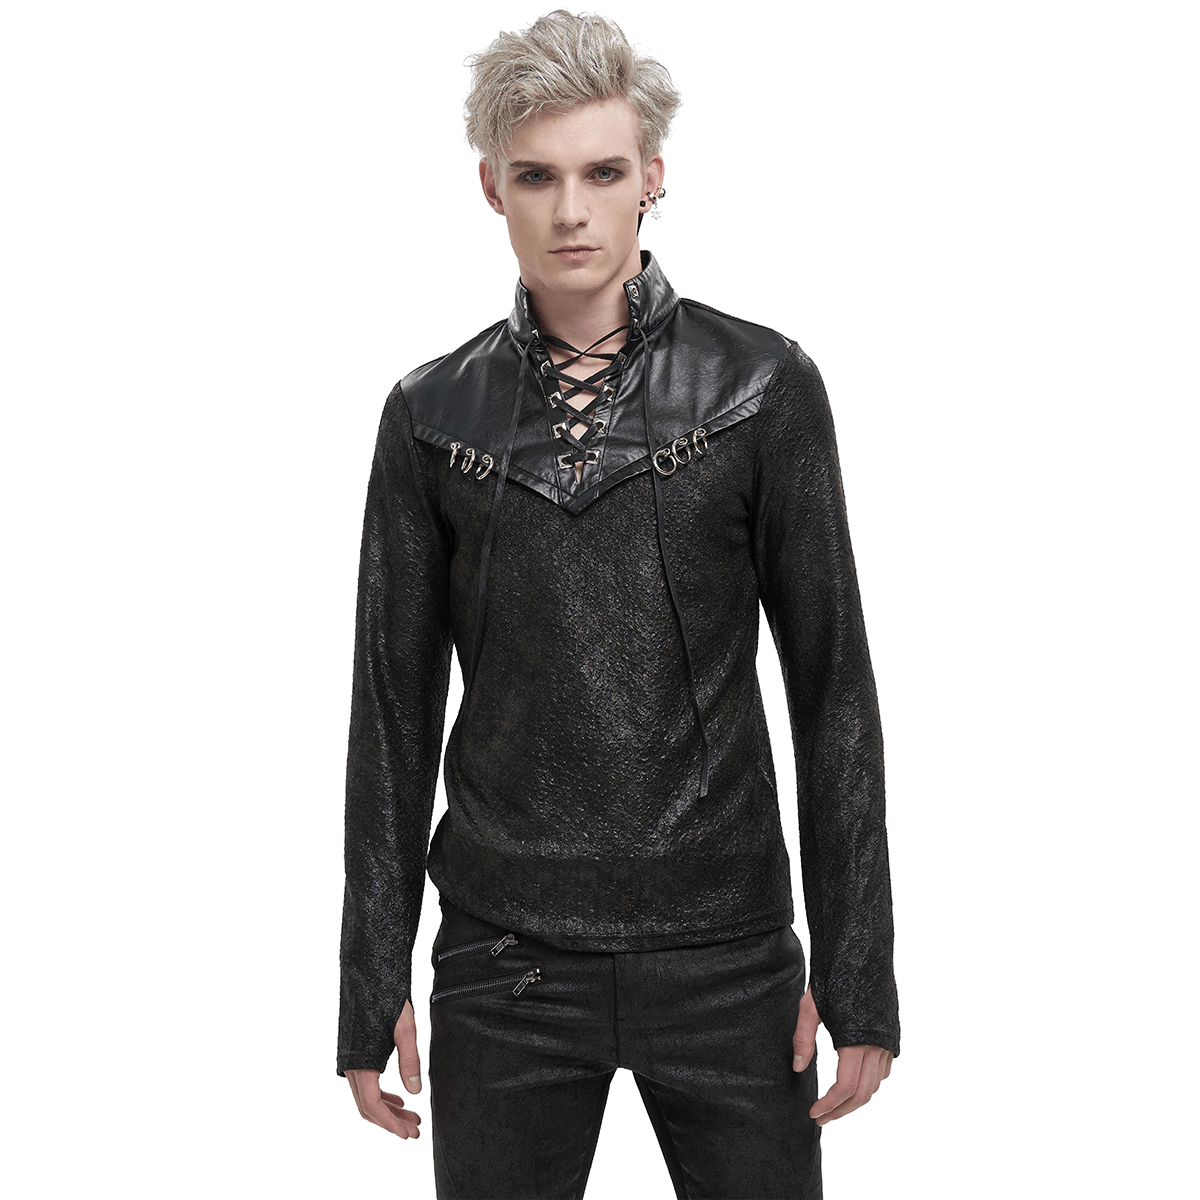 Fashion Black Stand Collar Sweatshirt with Lace-Up / Gothic Men's Metal Rings Sweatshirt